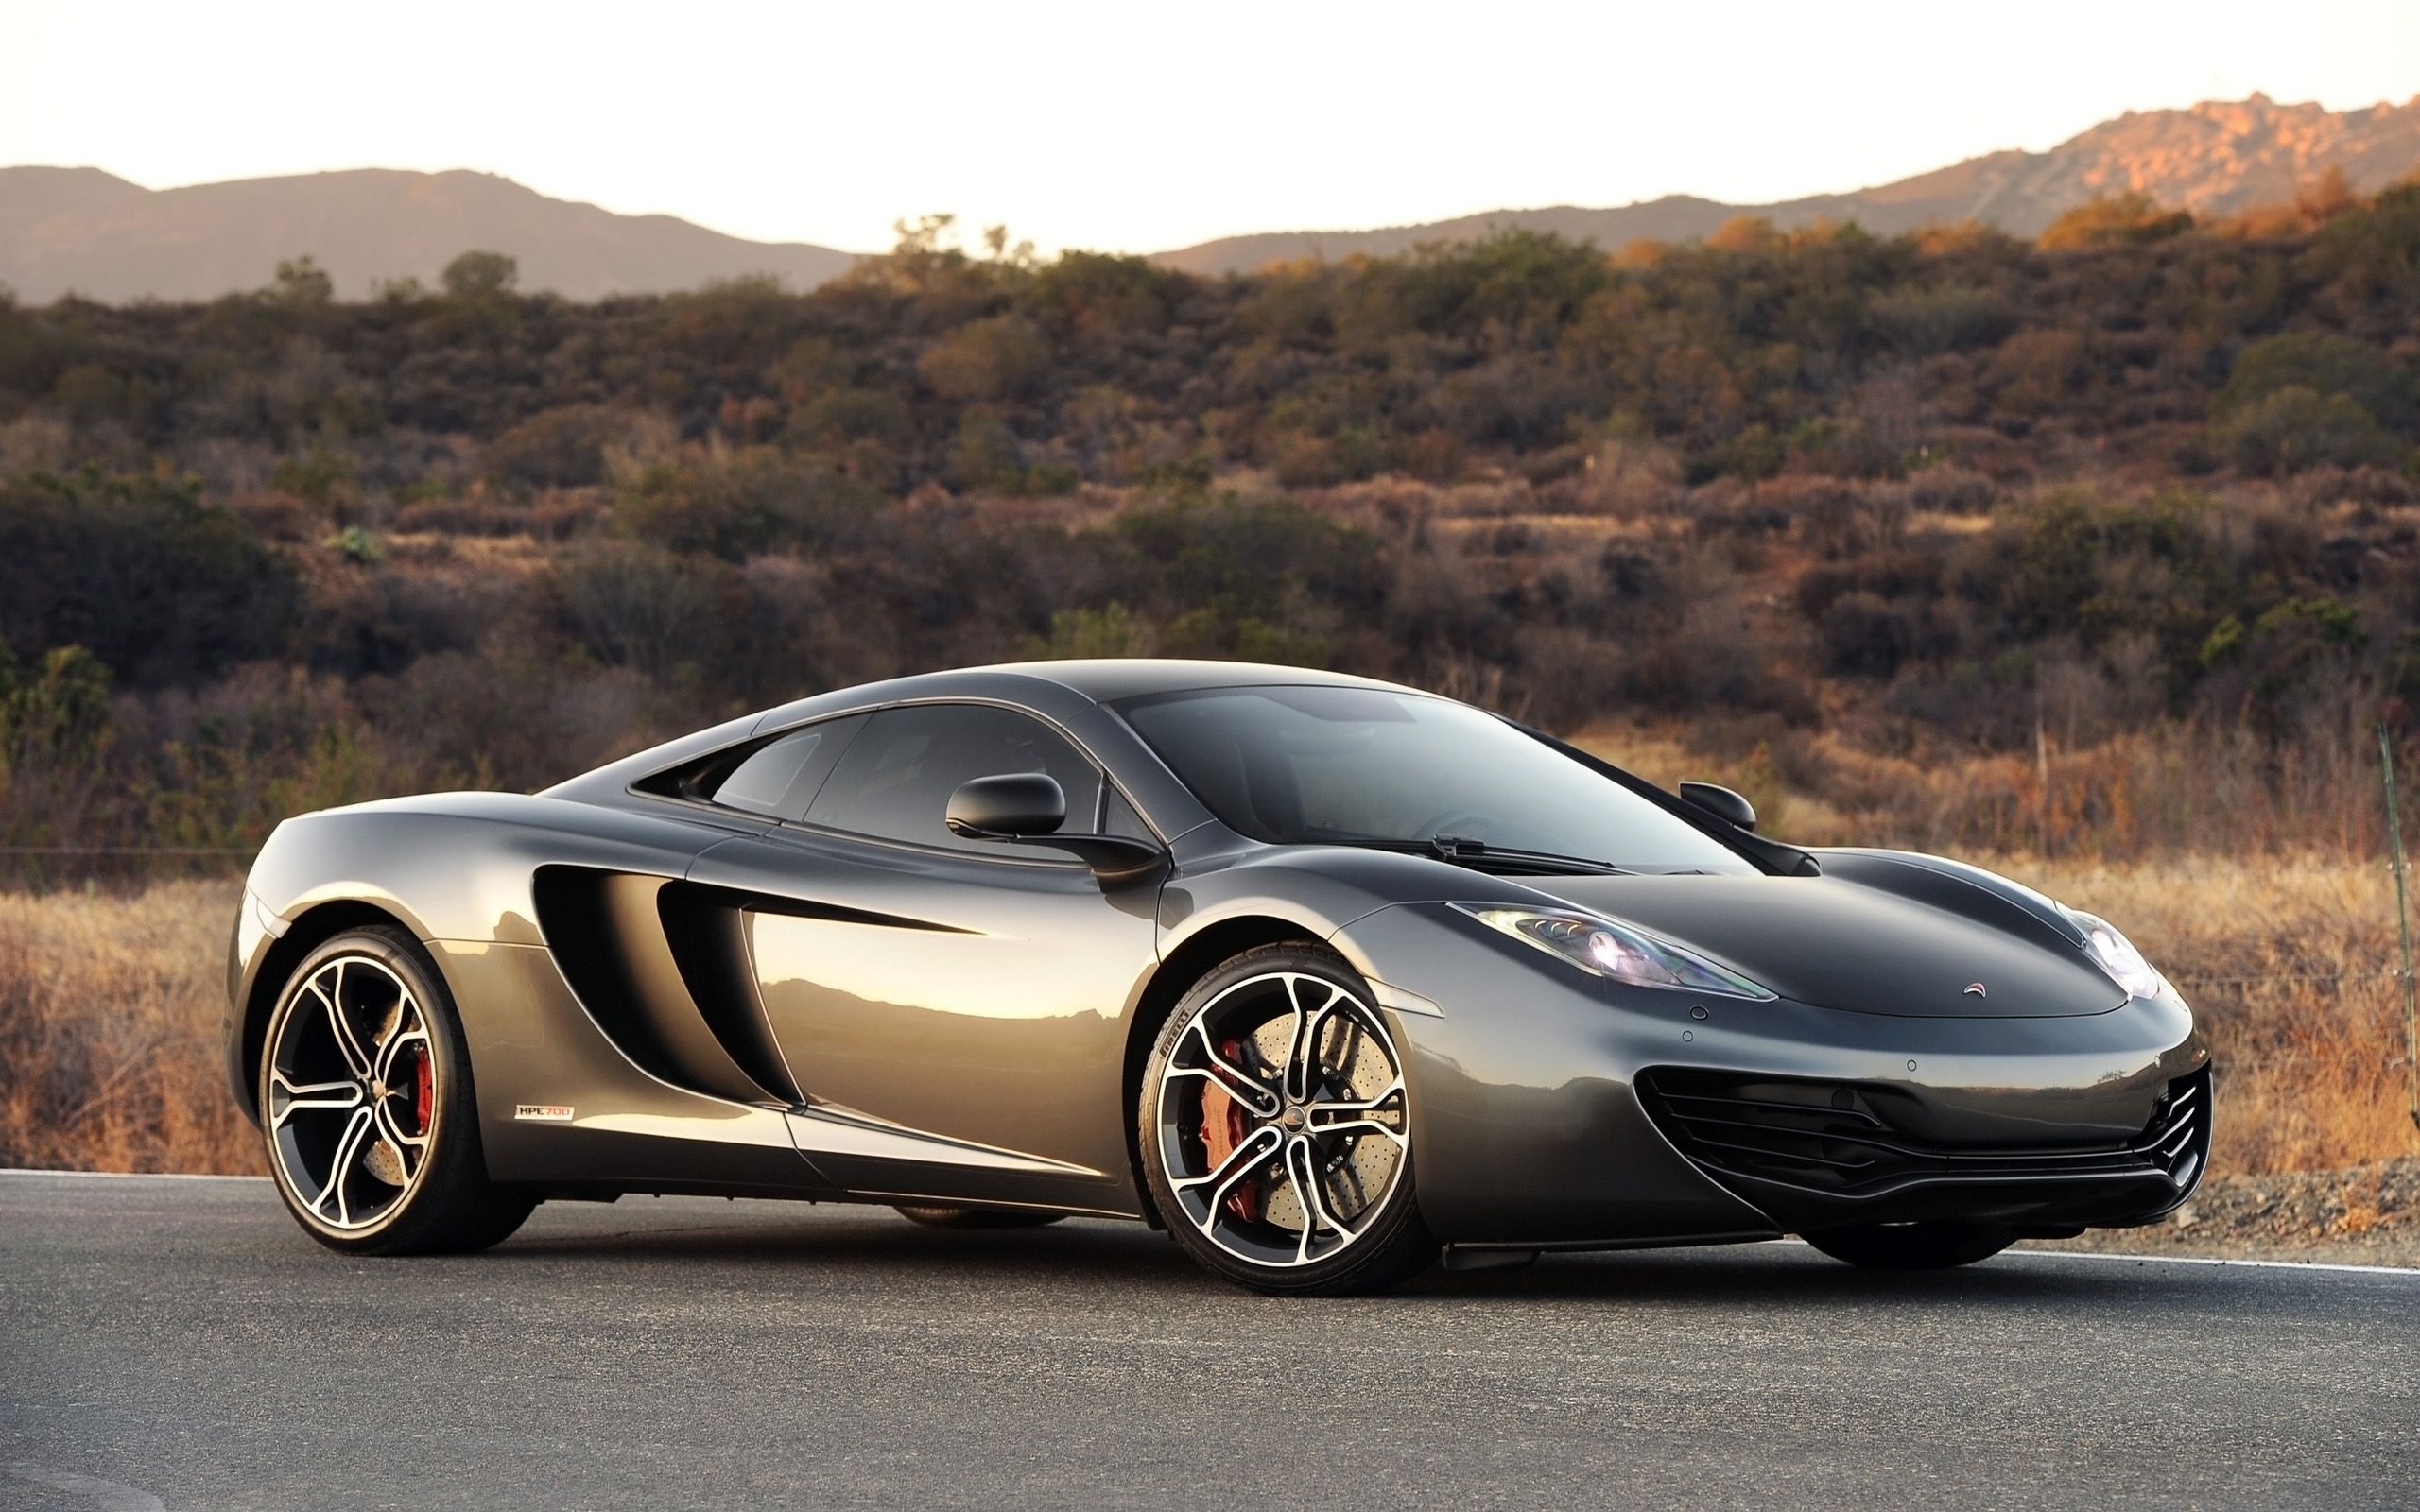 McLaren 12C, Exquisite car, Dynamic performance, Stunning visuals, 2560x1600 HD Desktop